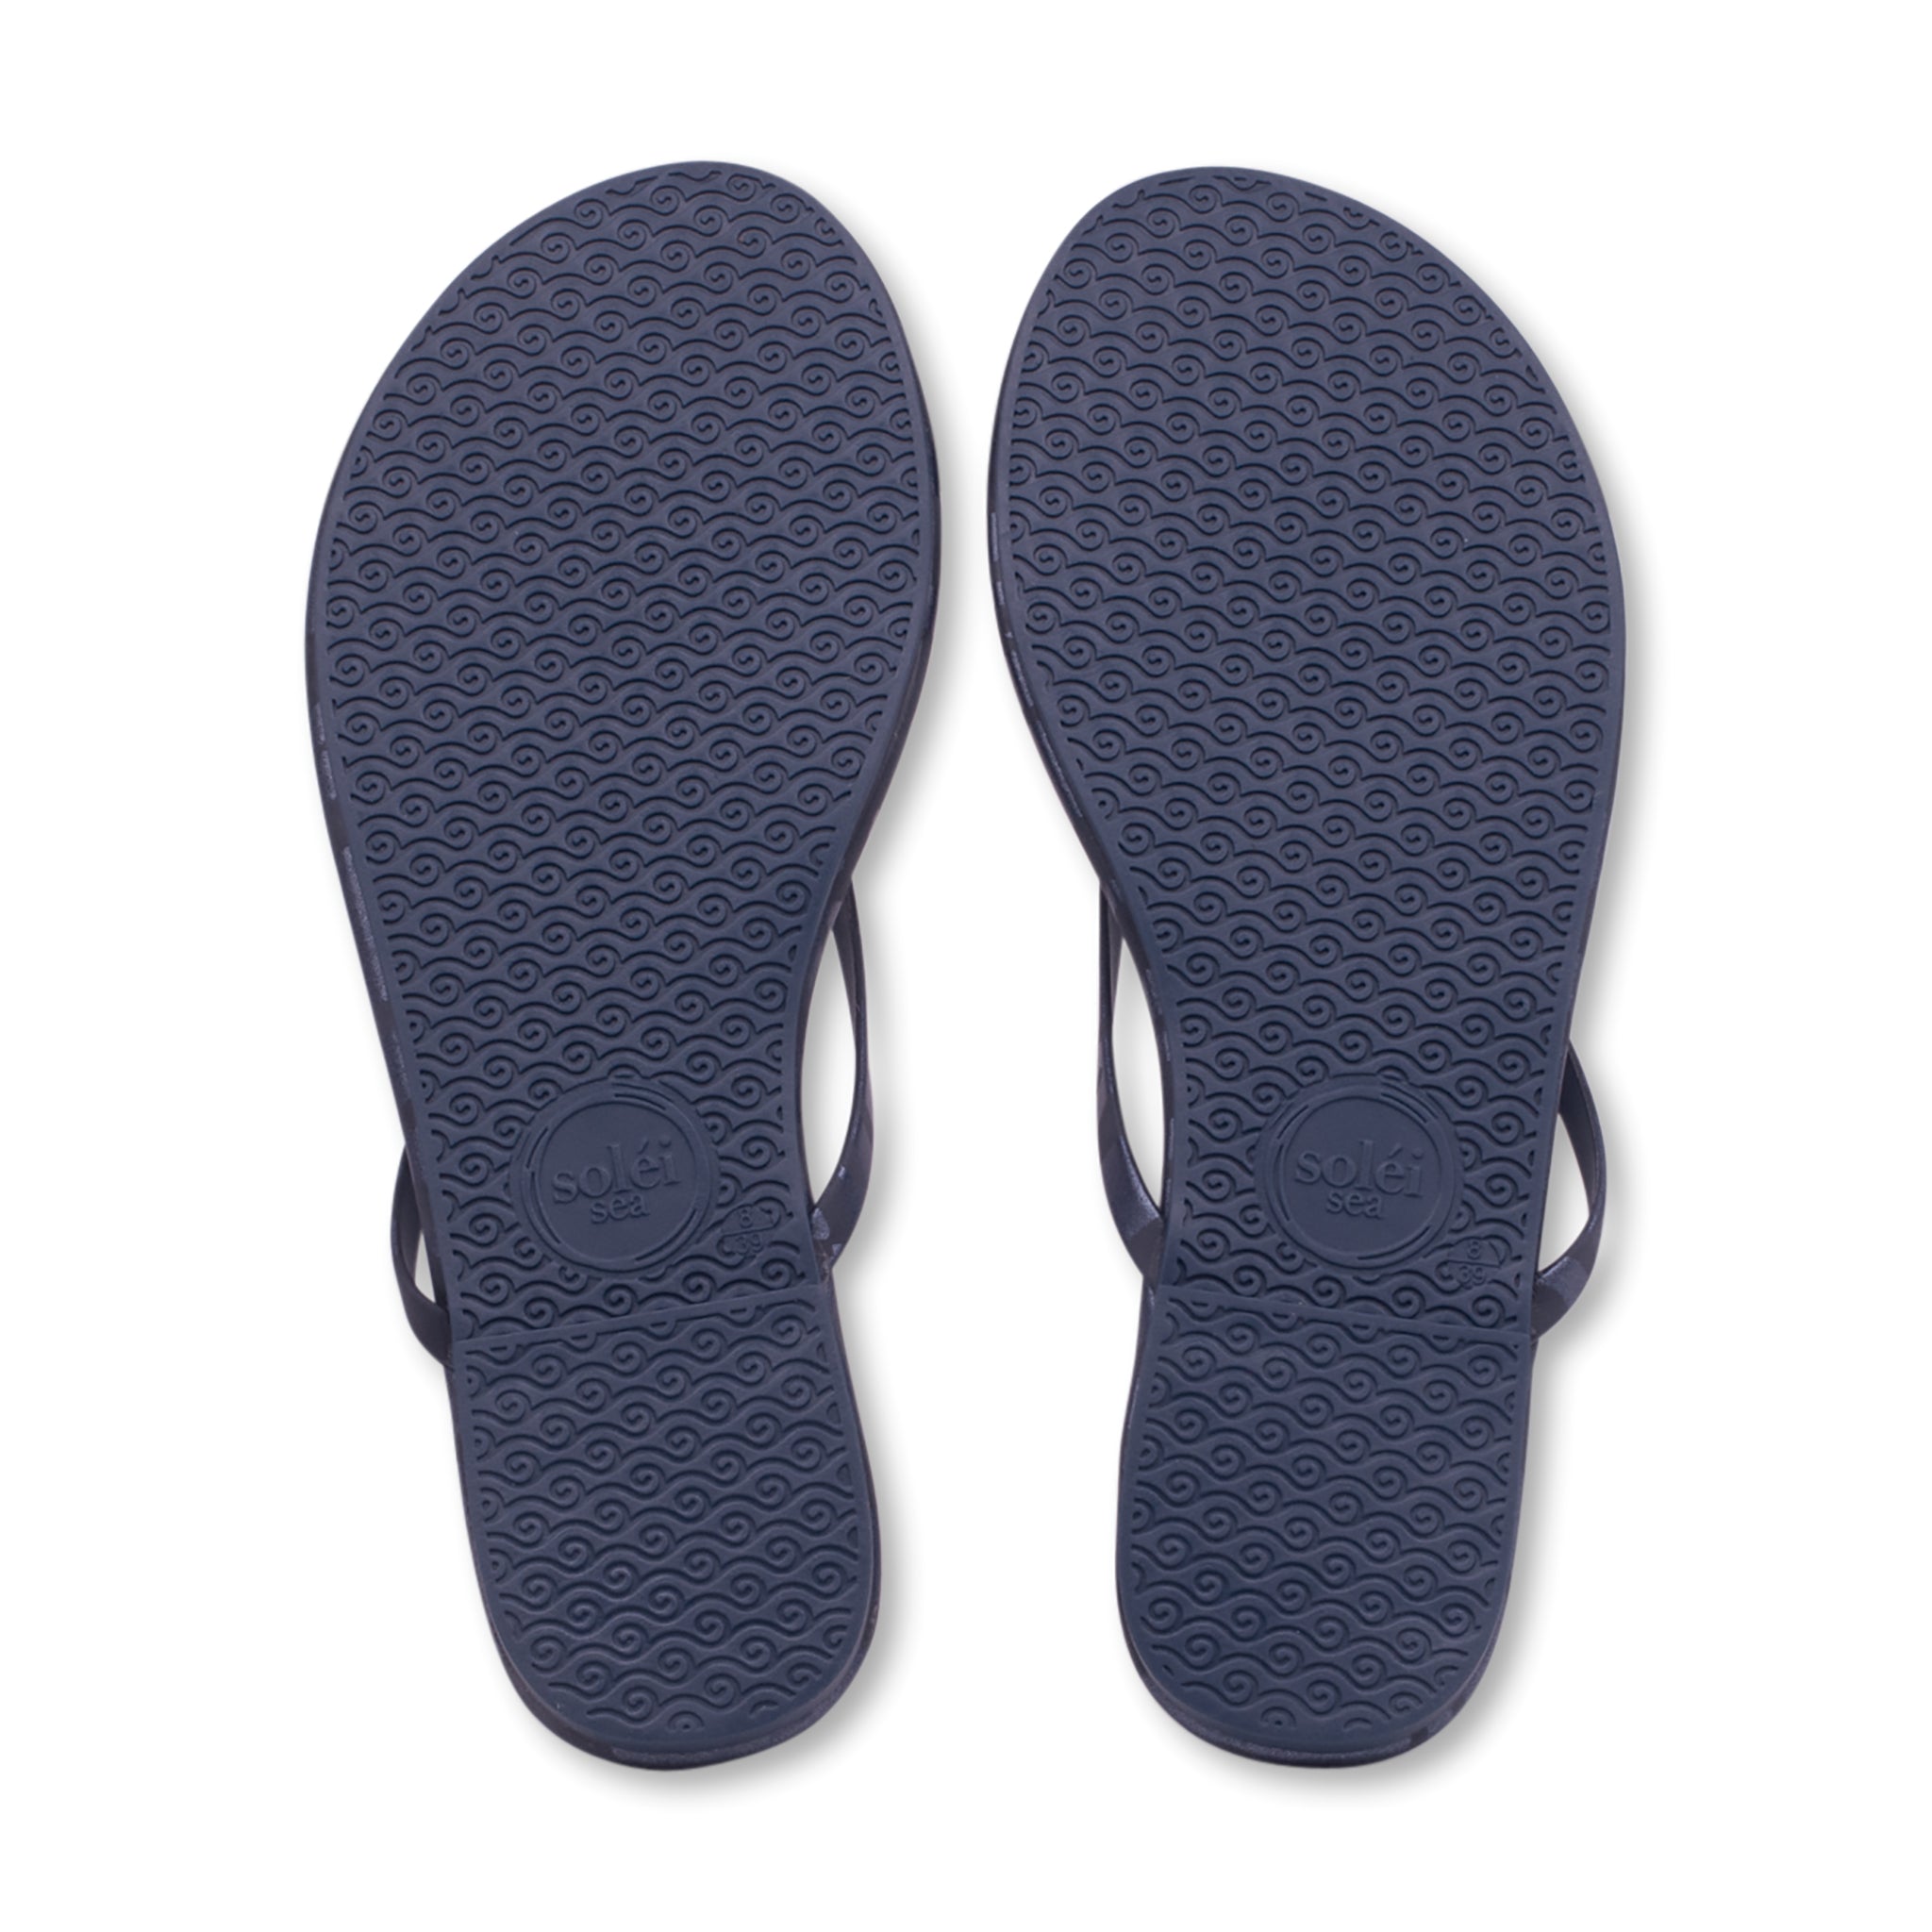 Indie Camo Metallic Blue Sandal